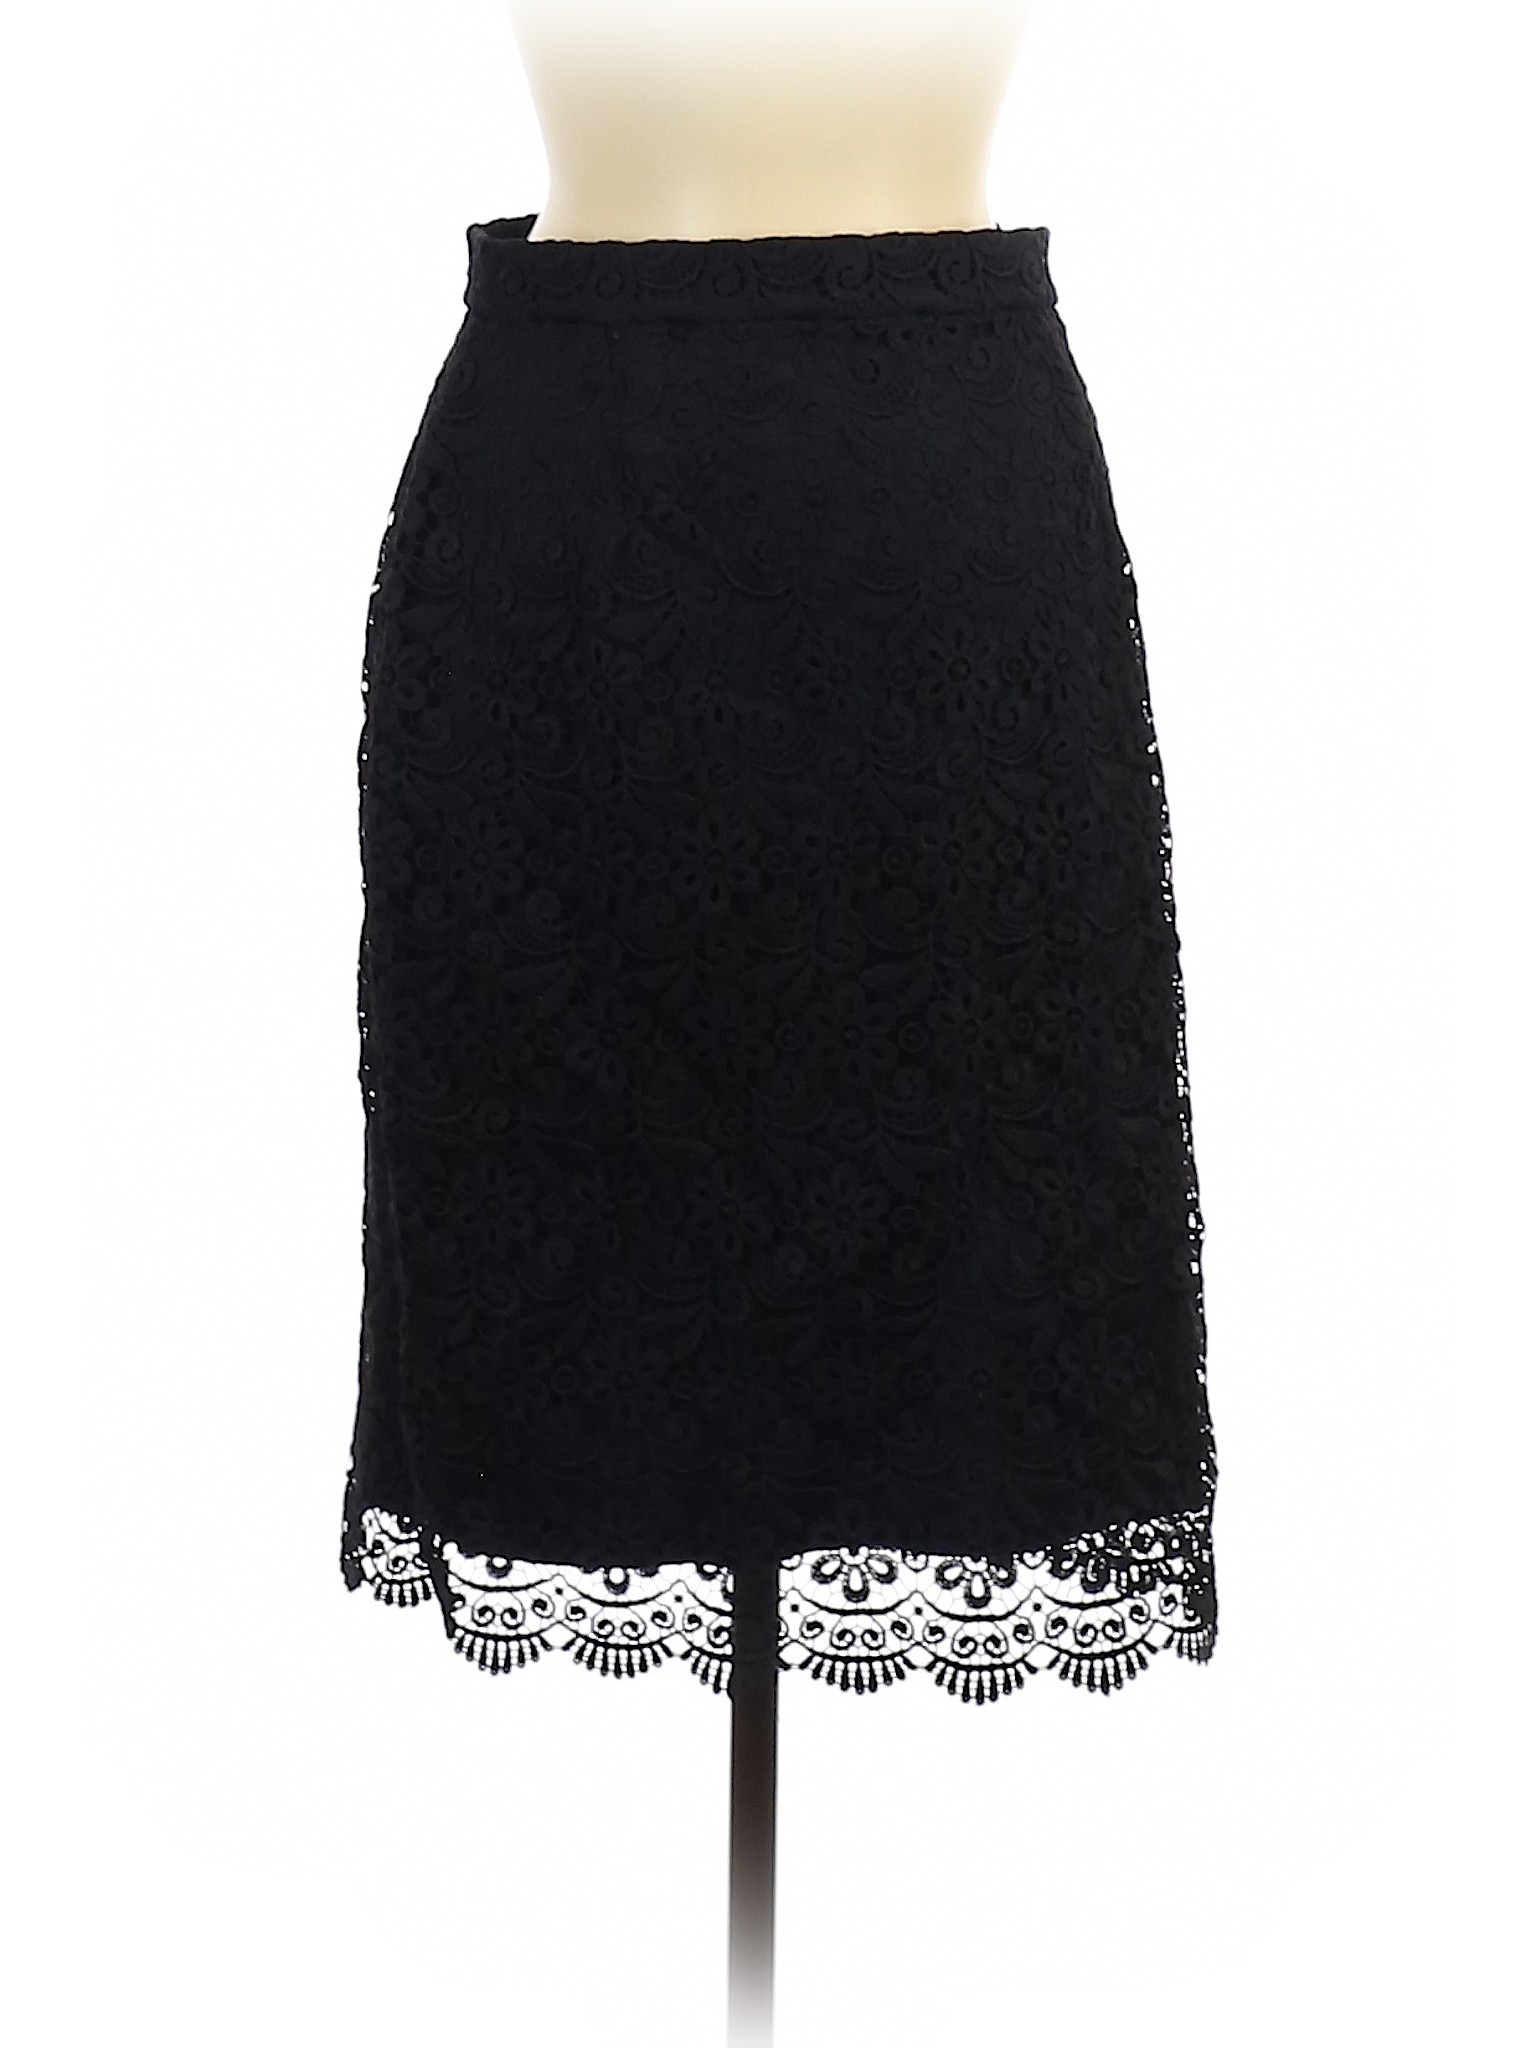 Uniqlo Women Black Casual Skirt M | eBay